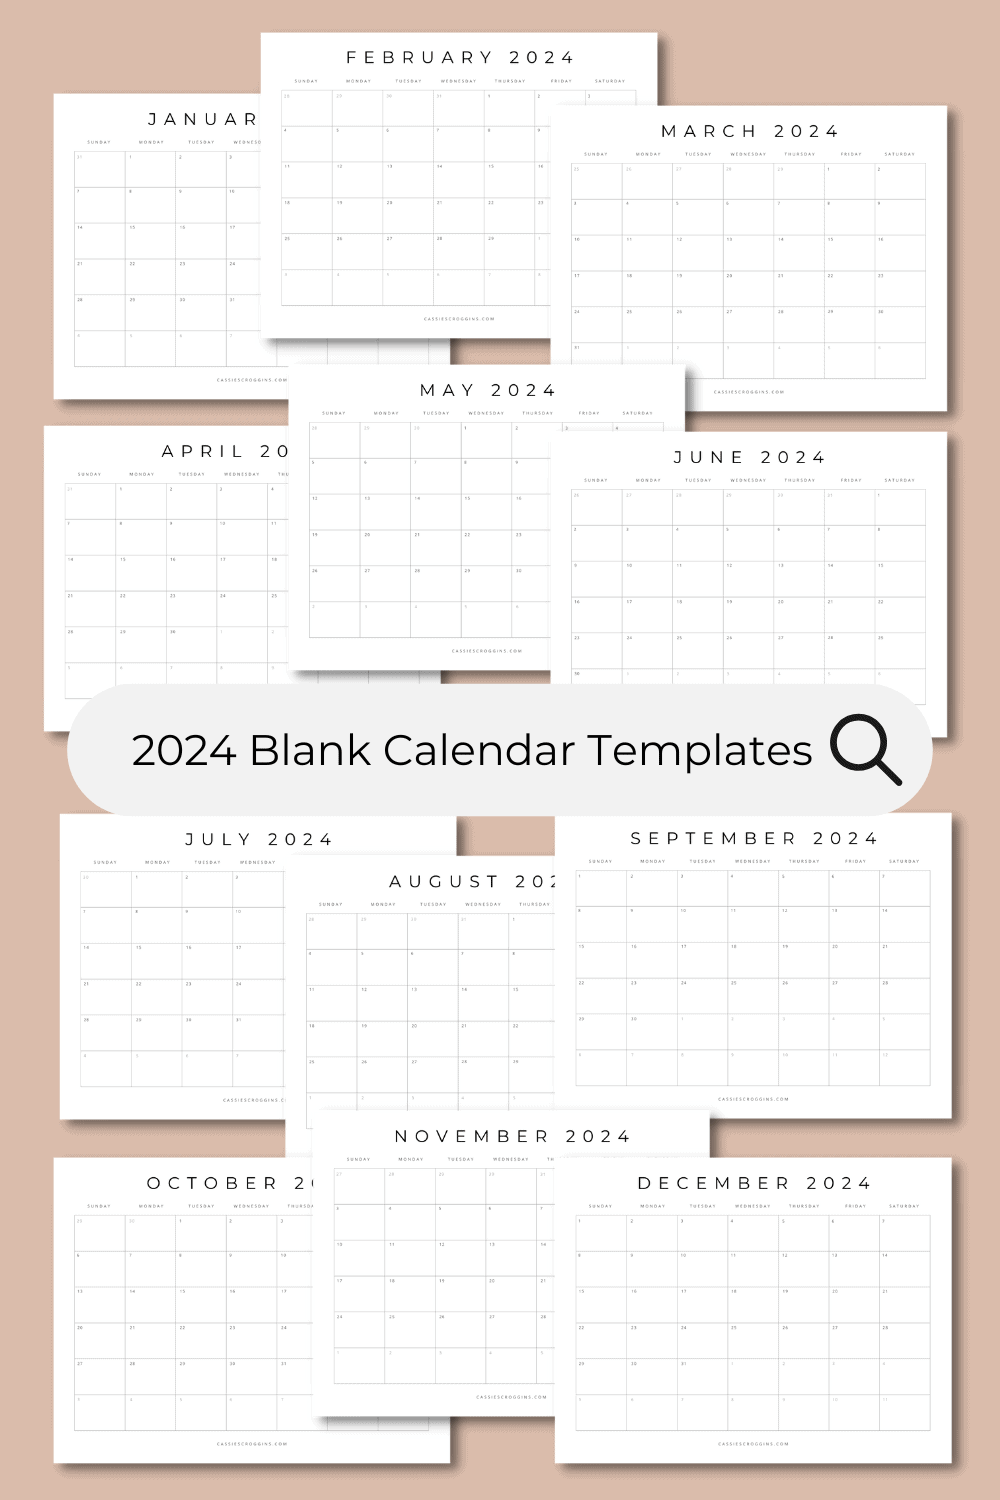 Free Printable 2024 Blank Calendar Templates (All 12 Months) inside Free Printable Calendar 2024 20